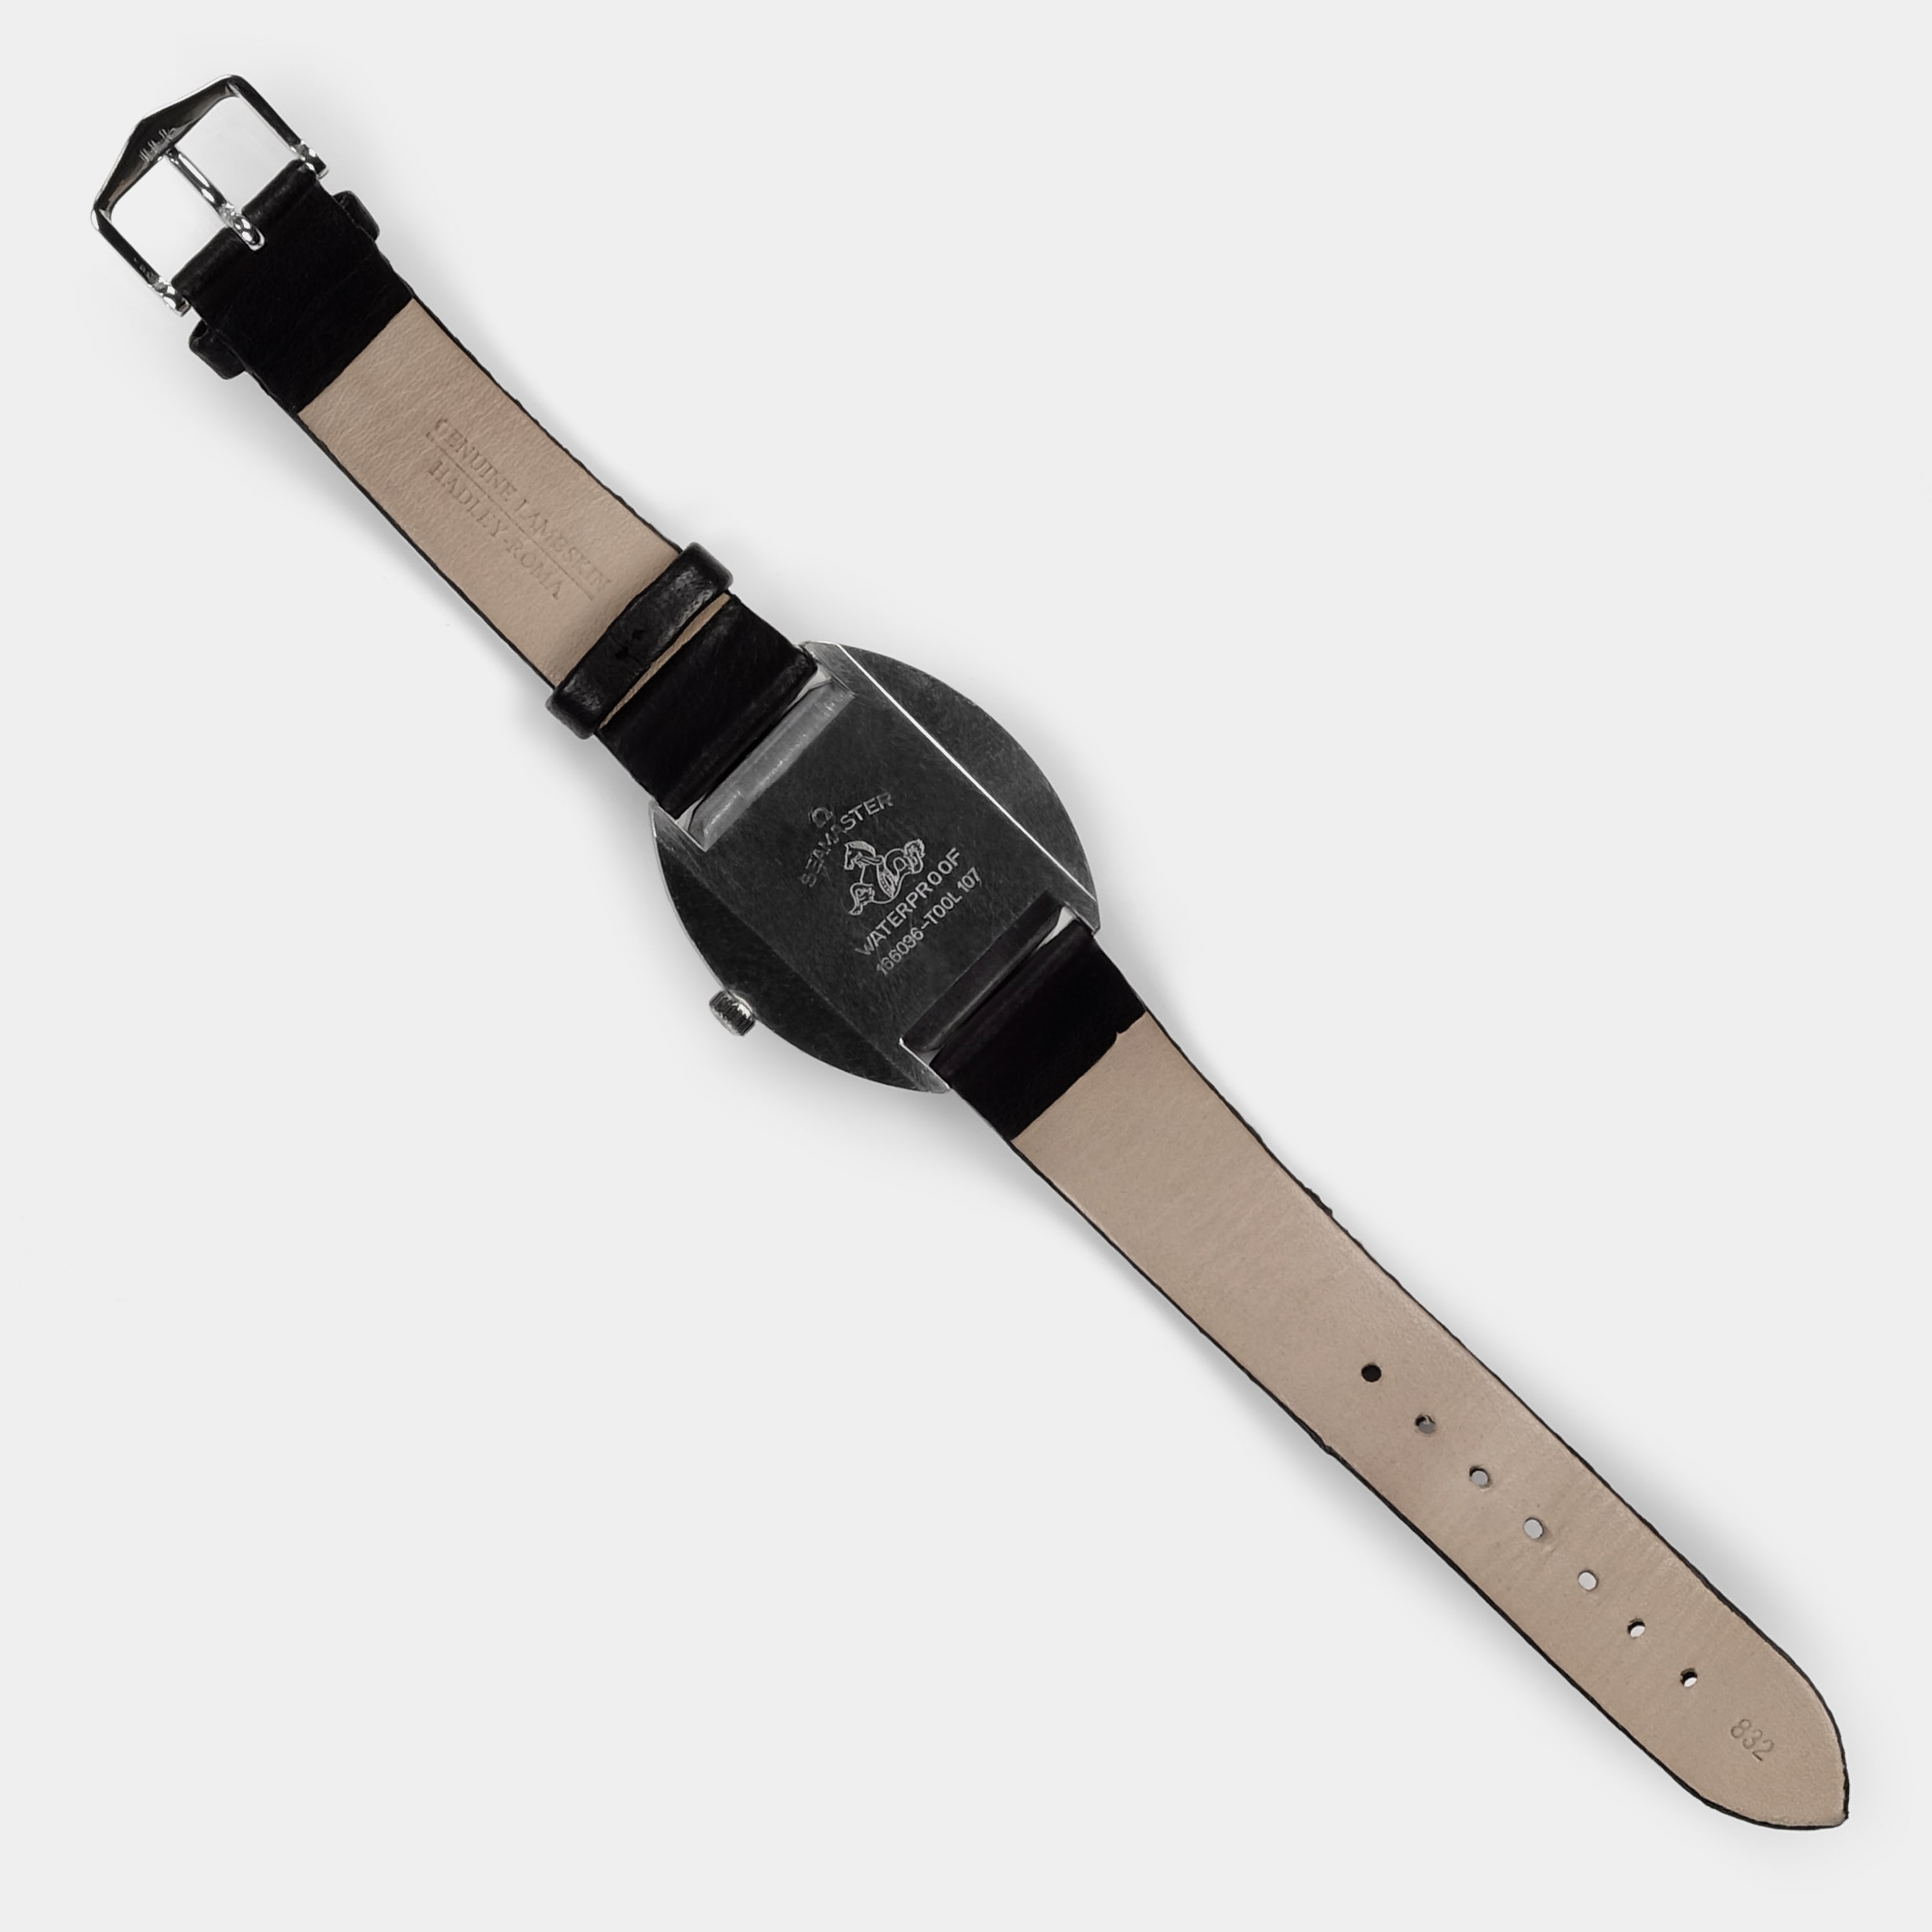 Omega Seamaster Cosmic Ref. 166.036 Day-Date Automatic Circa 1970 Wristwatch